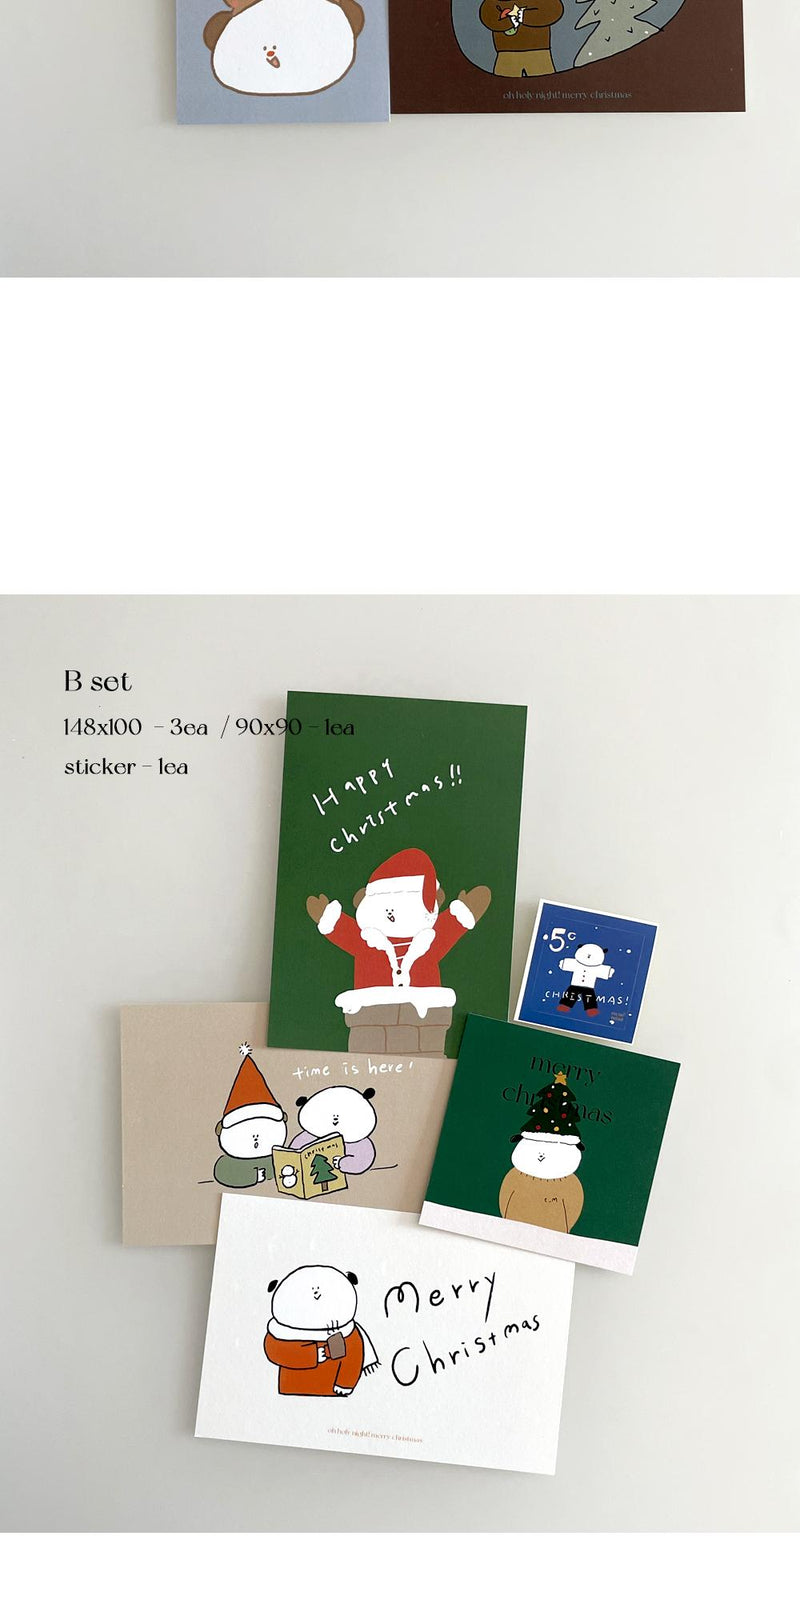 [HOLIDAY TIME] Christmas cards set !